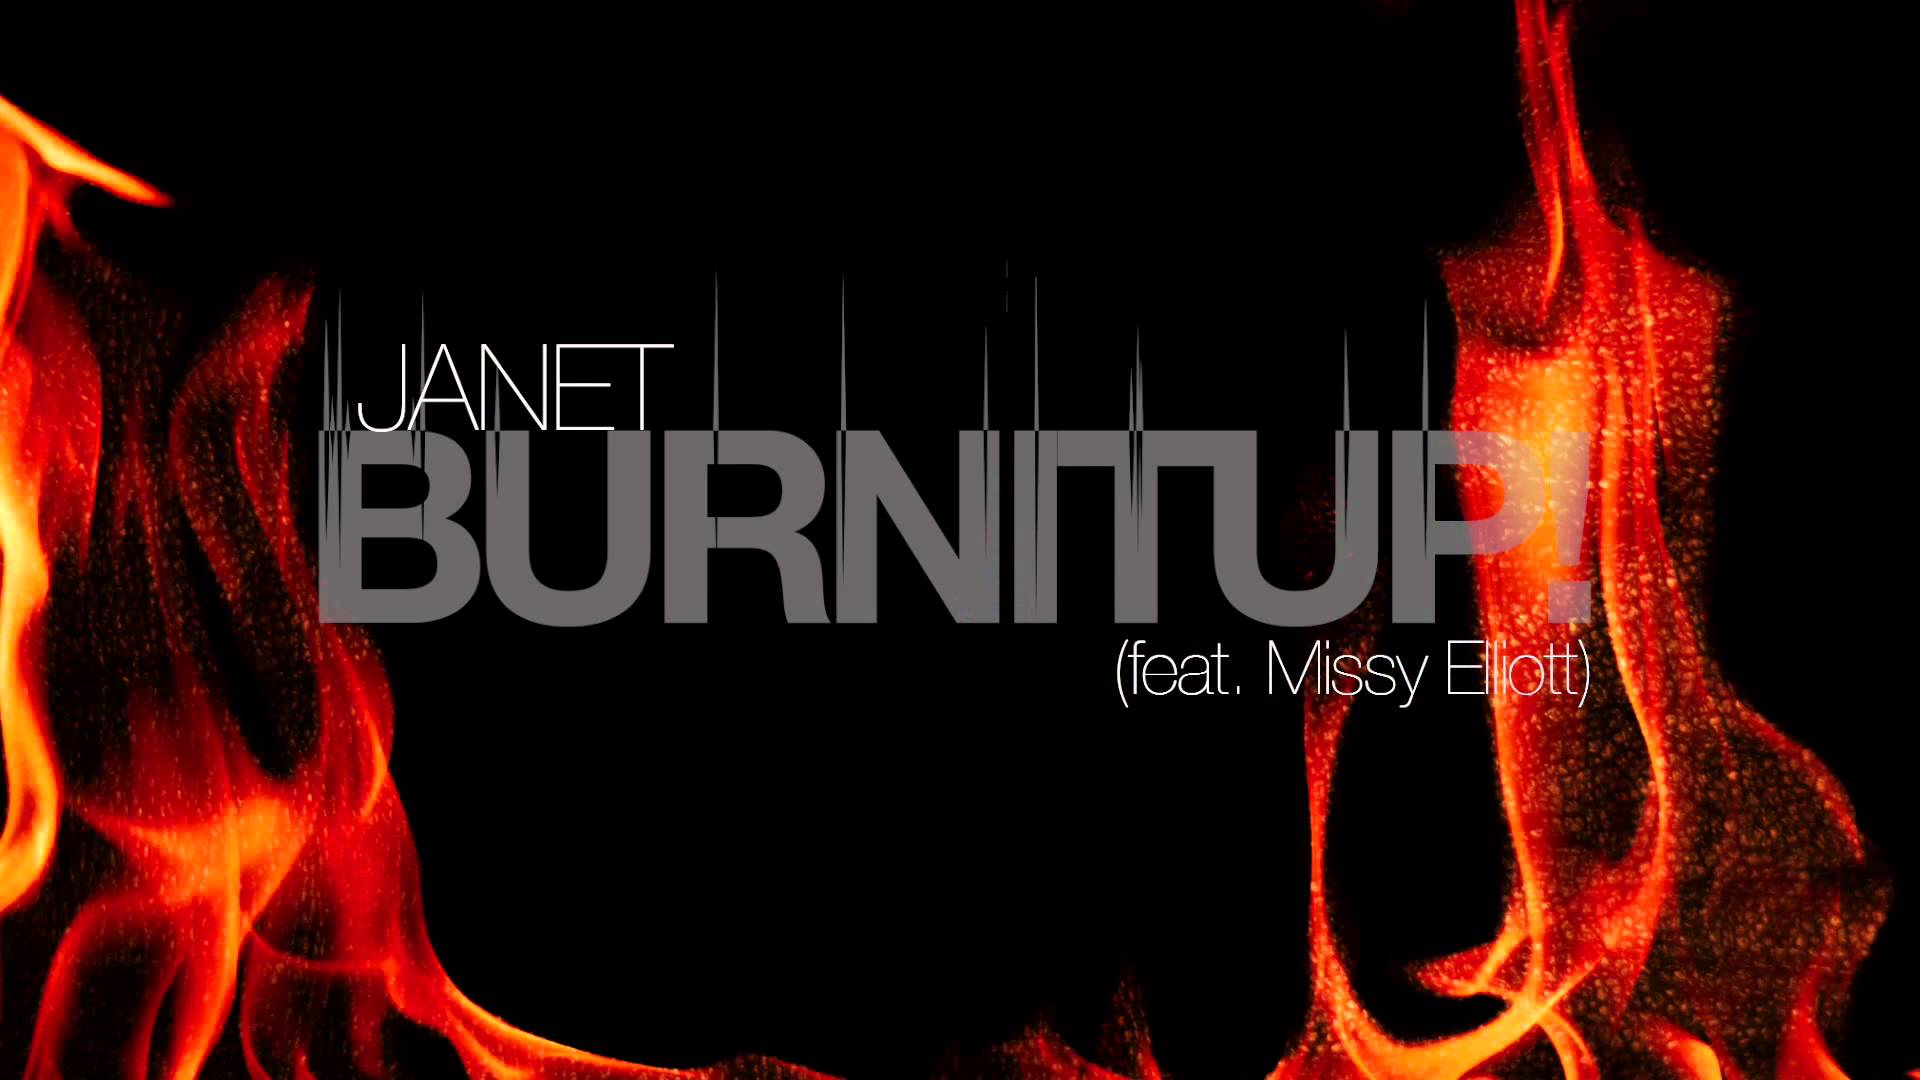 Janet Jackson – Burnitup! feat. Missy Elliott